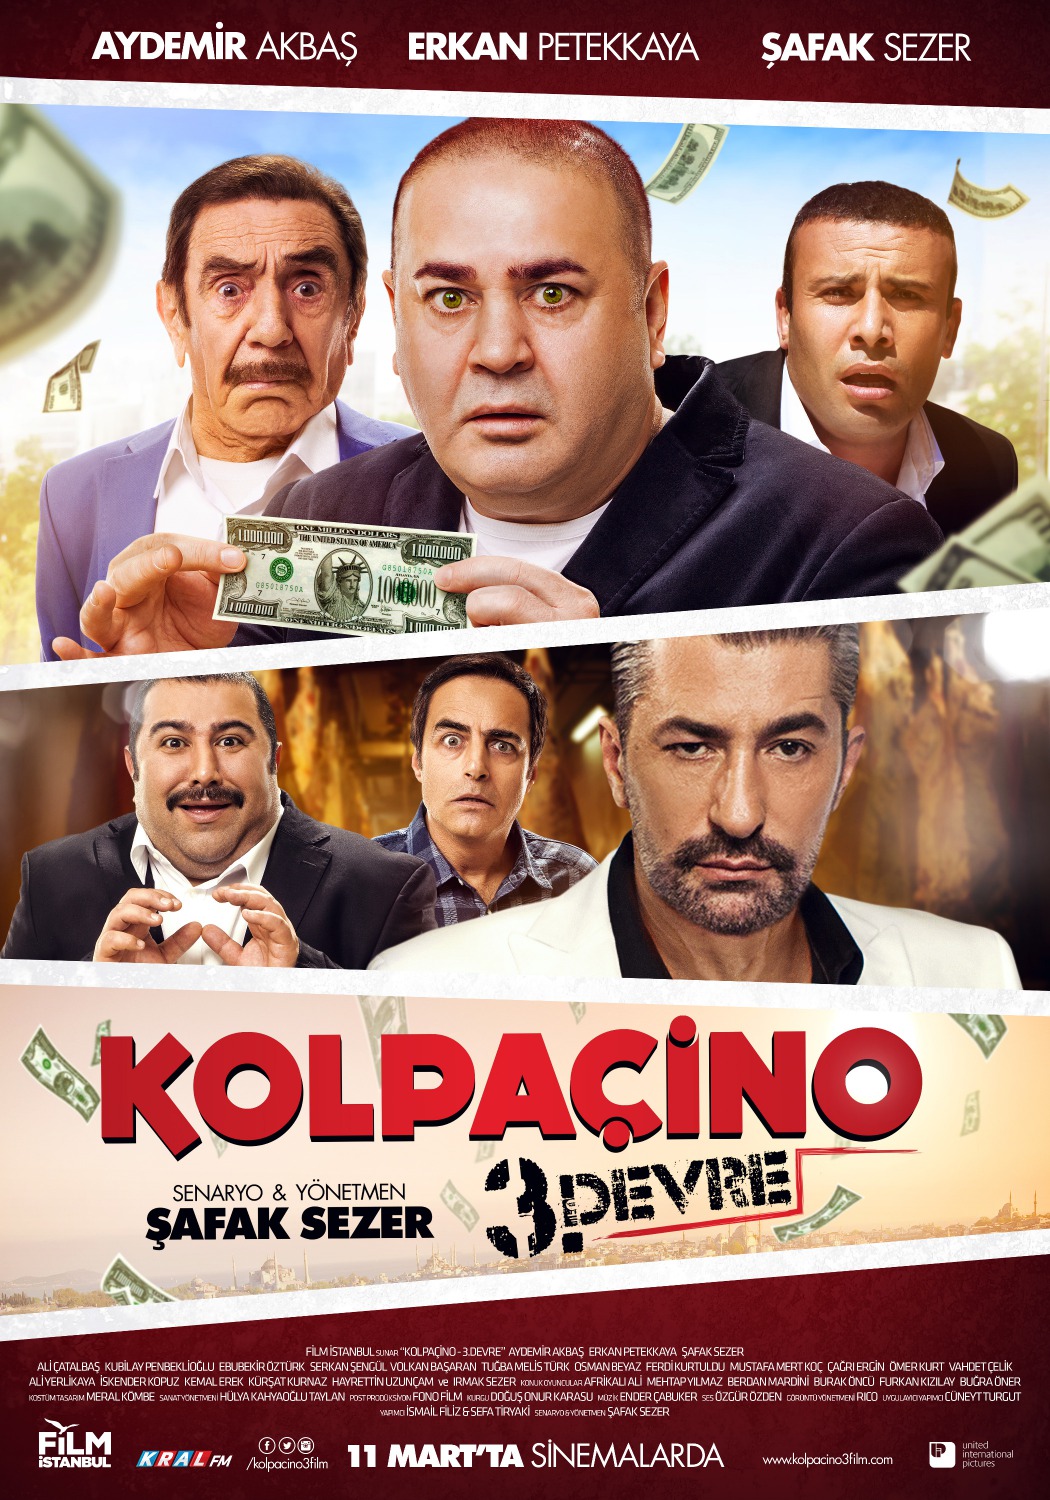 Extra Large Movie Poster Image for Kolpaçino 3. Devre 